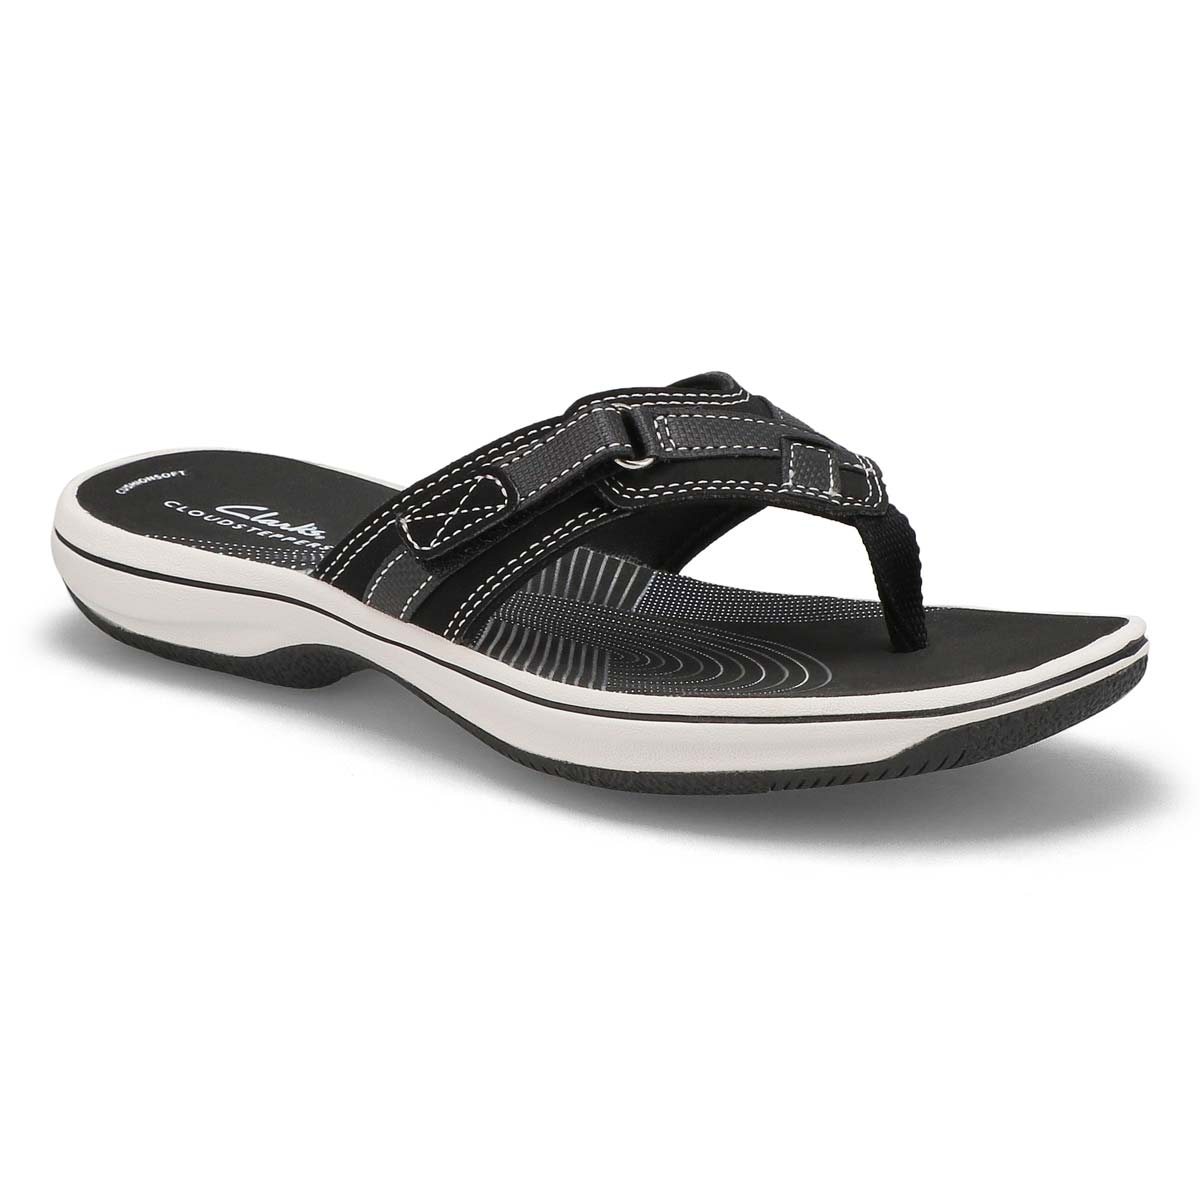 softmoc clarks sandals